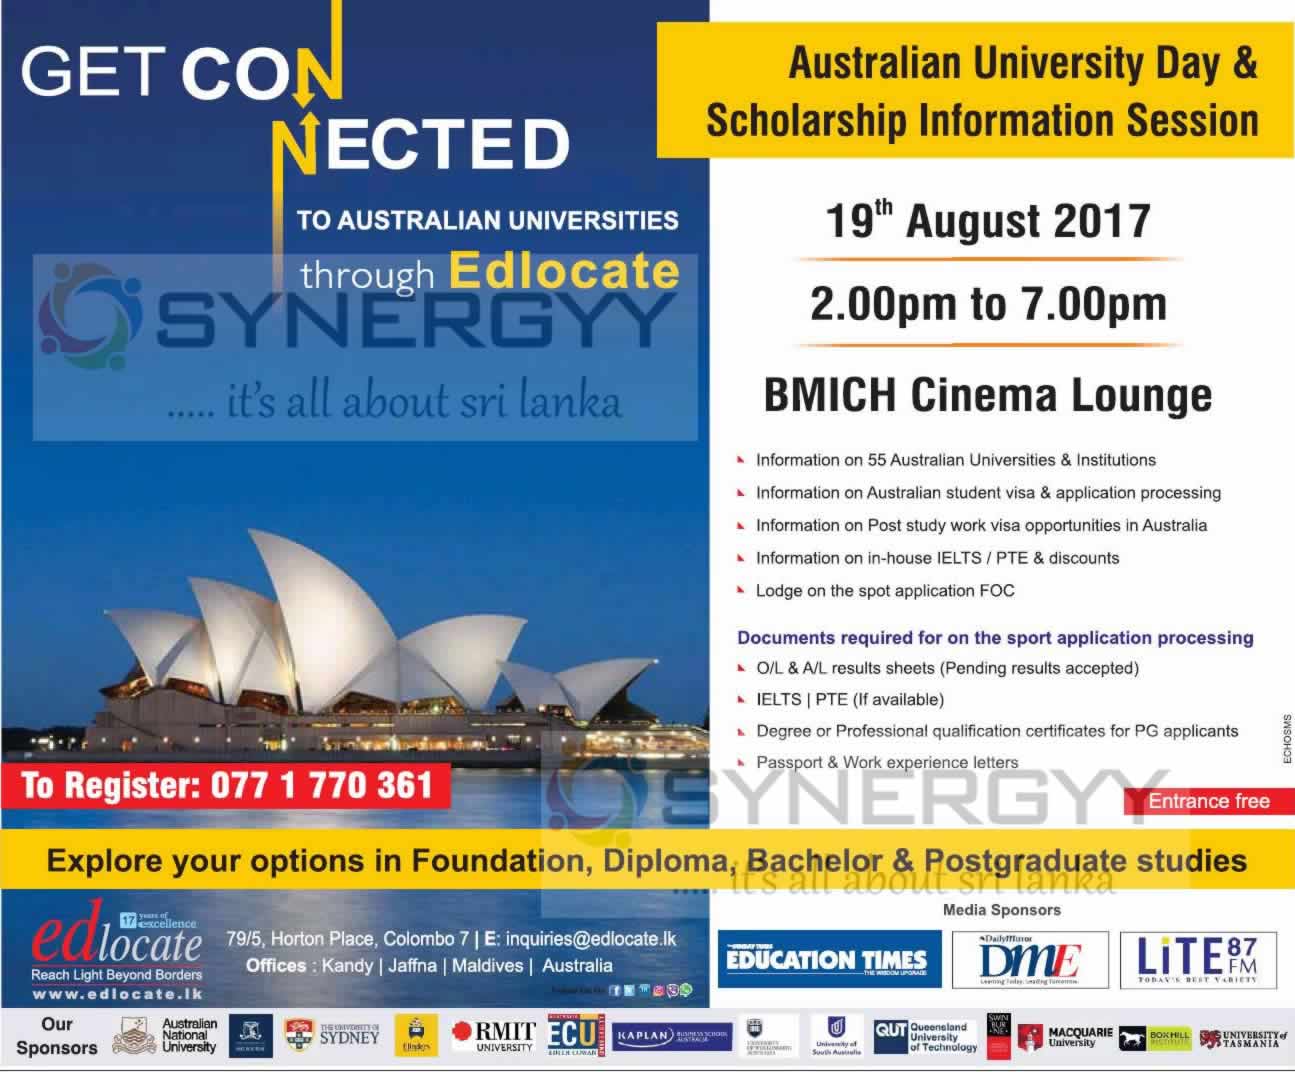 Australian University Day & Scholarship Information Session on 19th August 2017